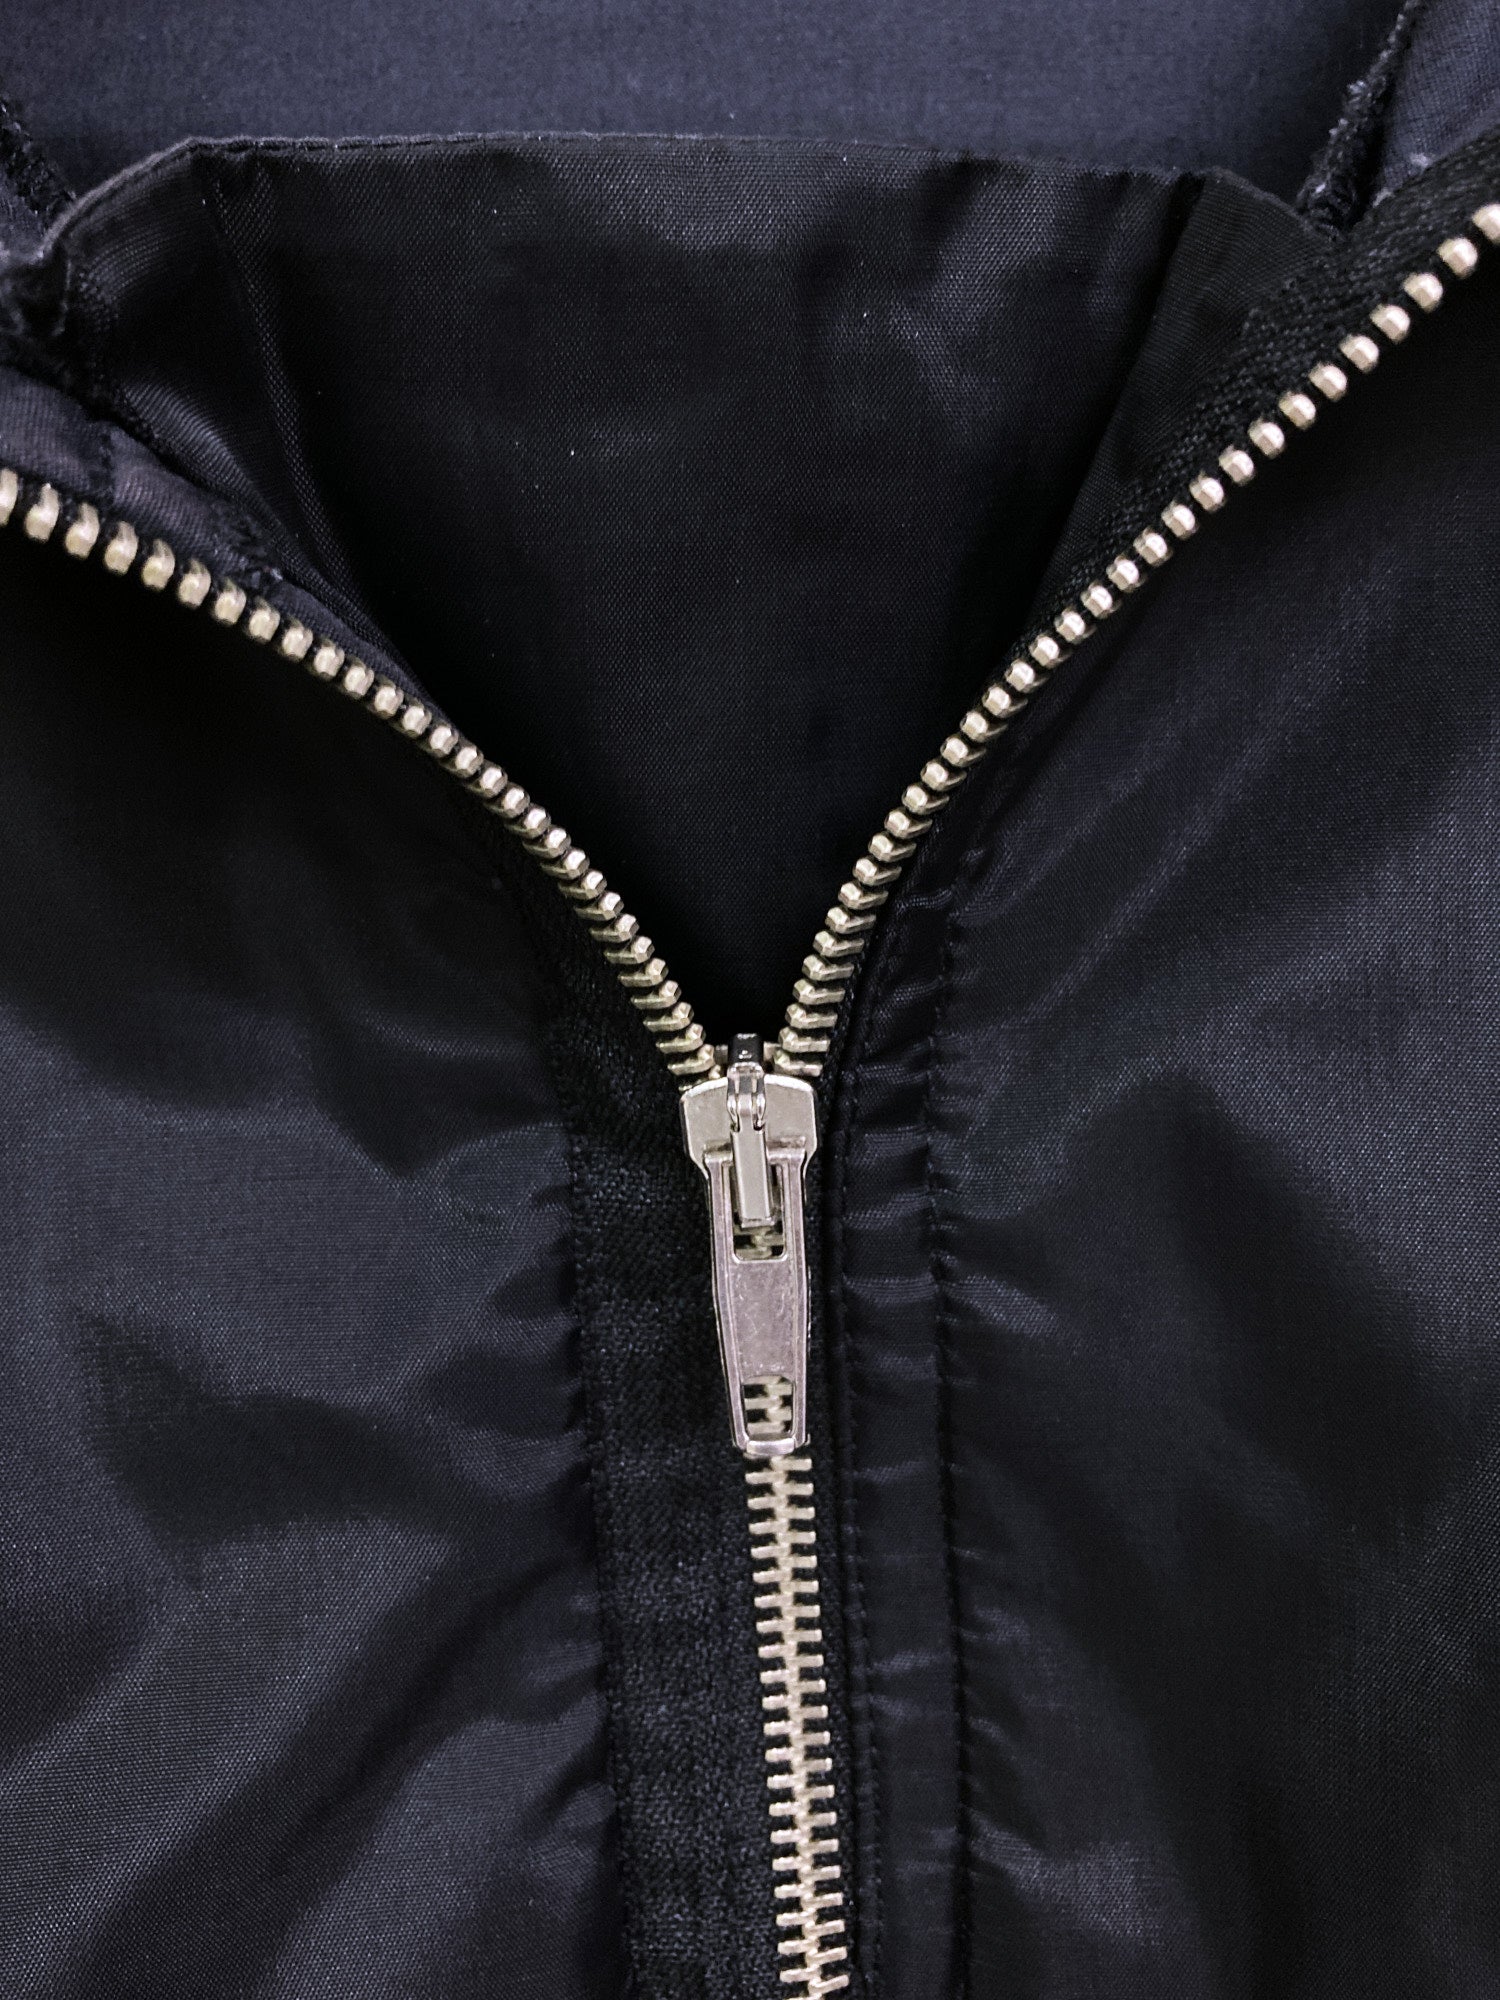 Jean Colonna padded black nylon hooded pullover windbreaker - size 48